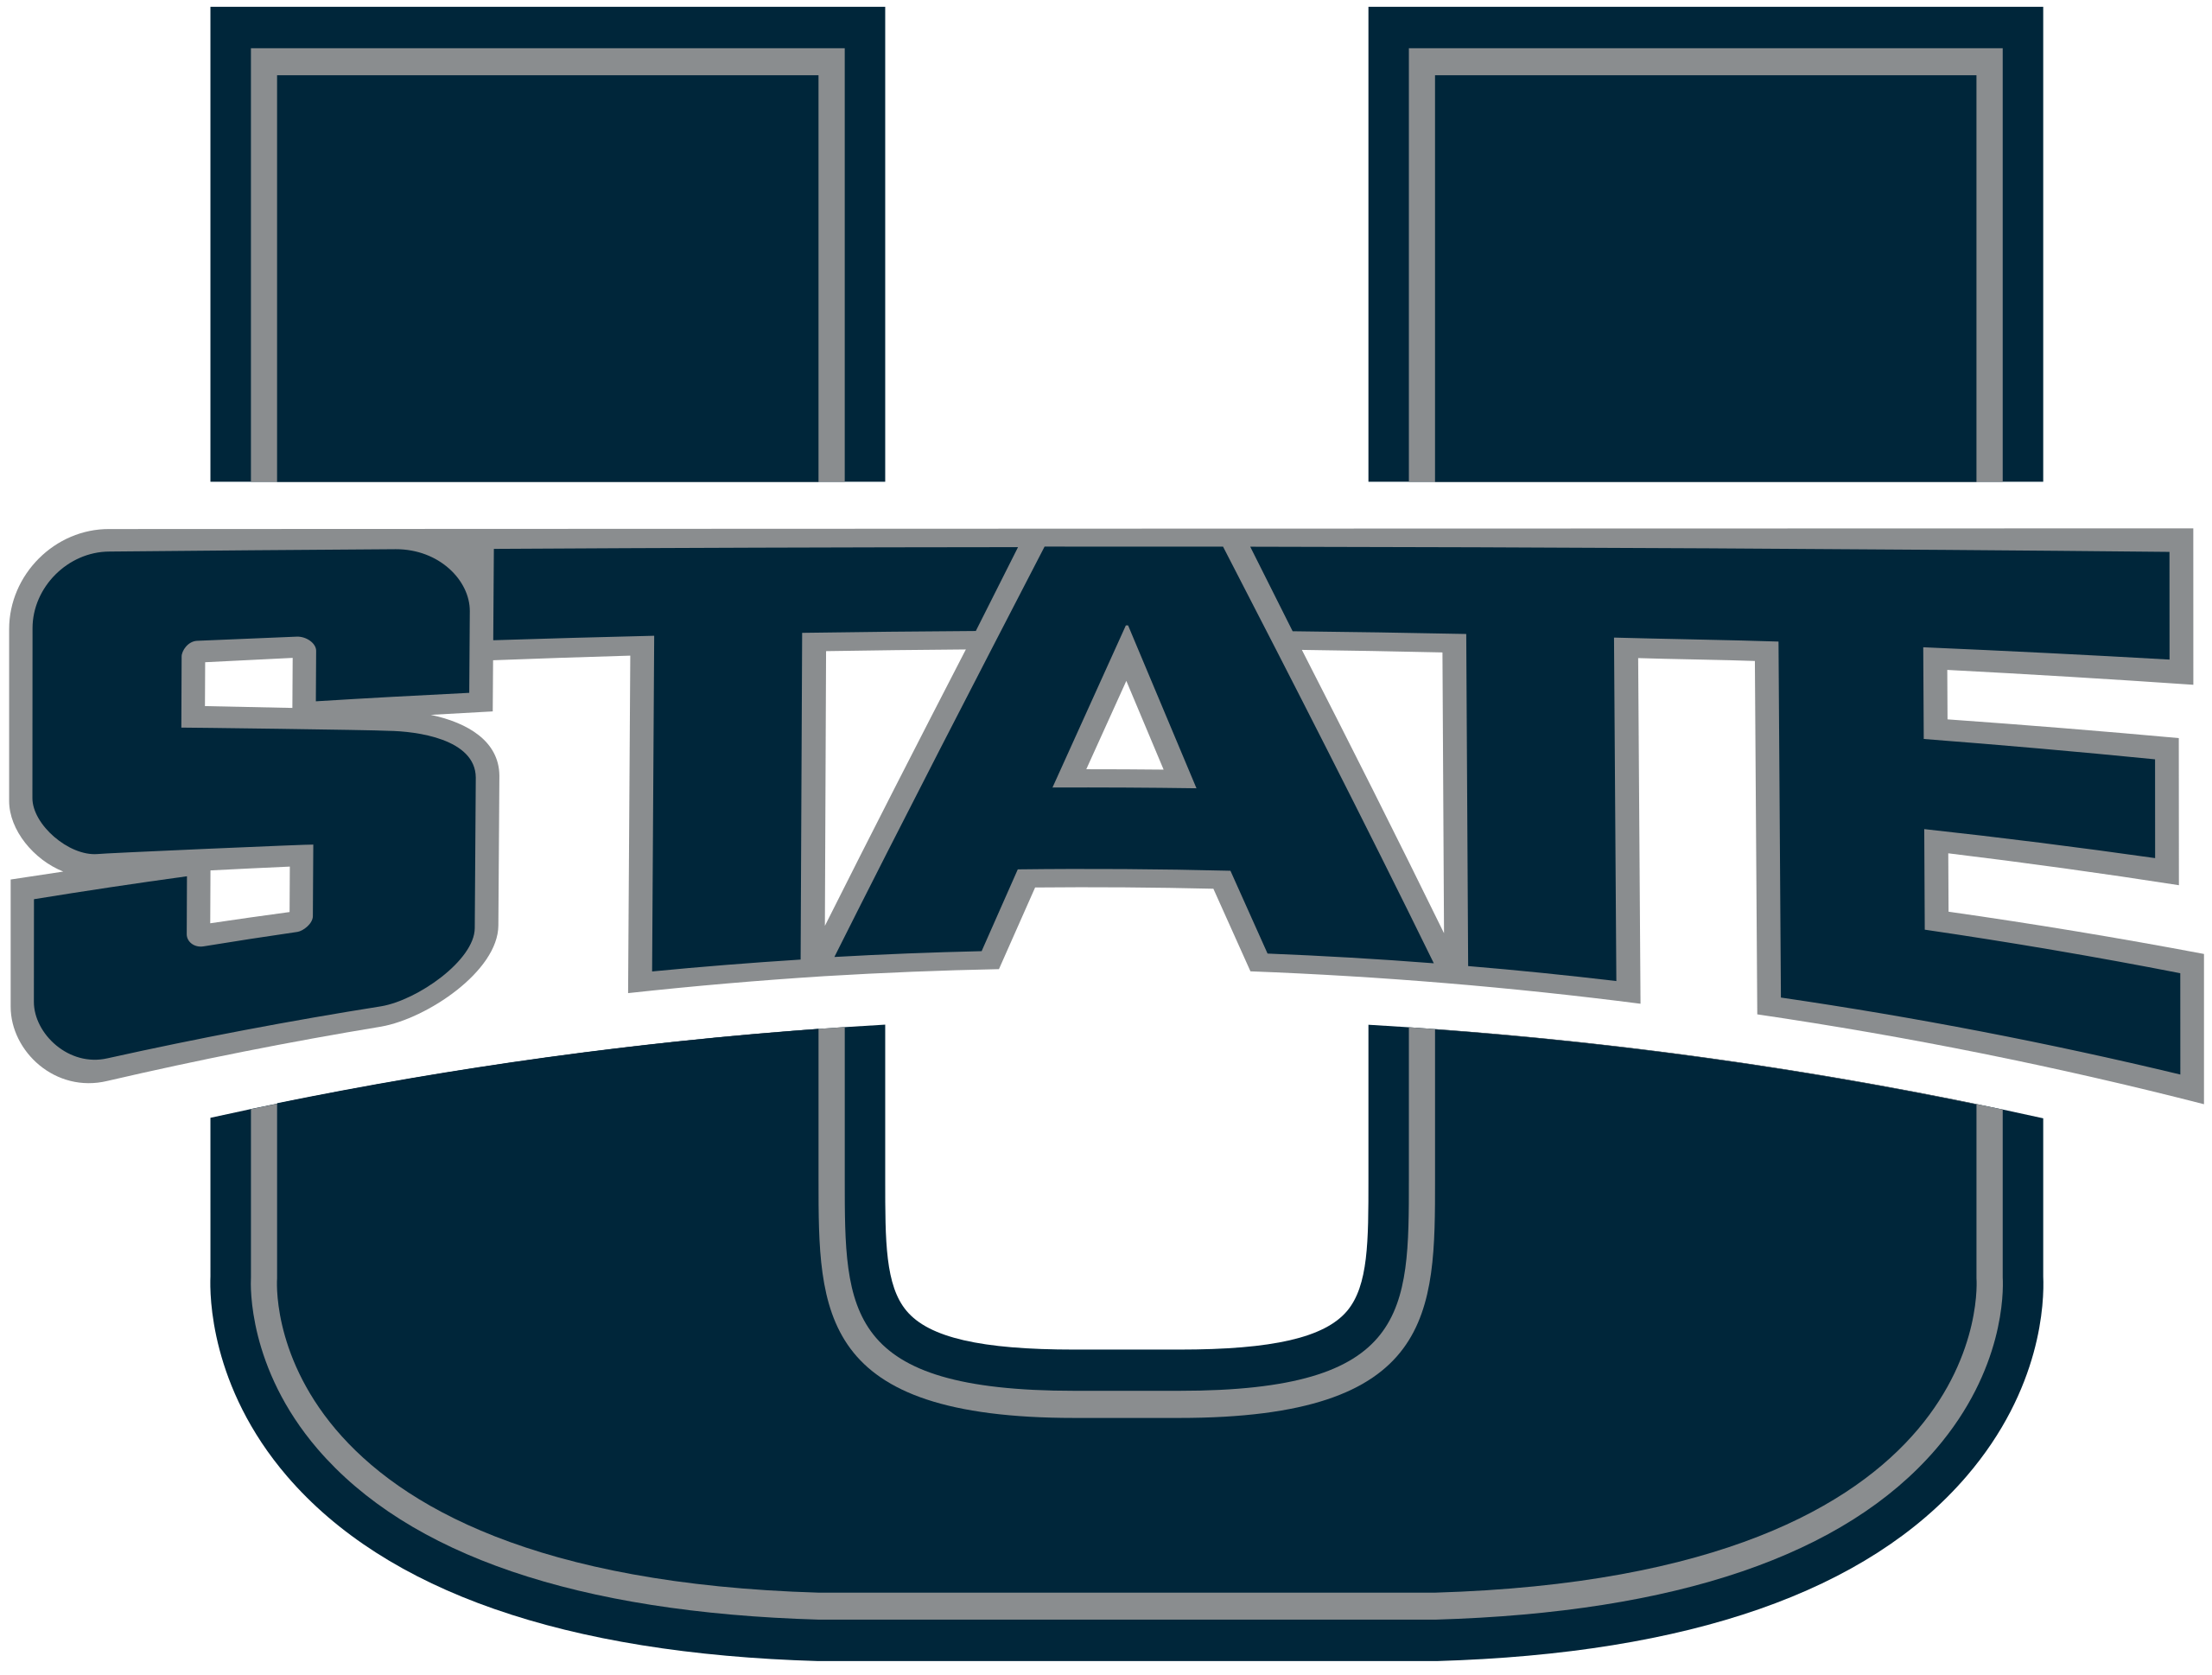 File:Utah State Aggies logo.svg - Wikimedia Commons